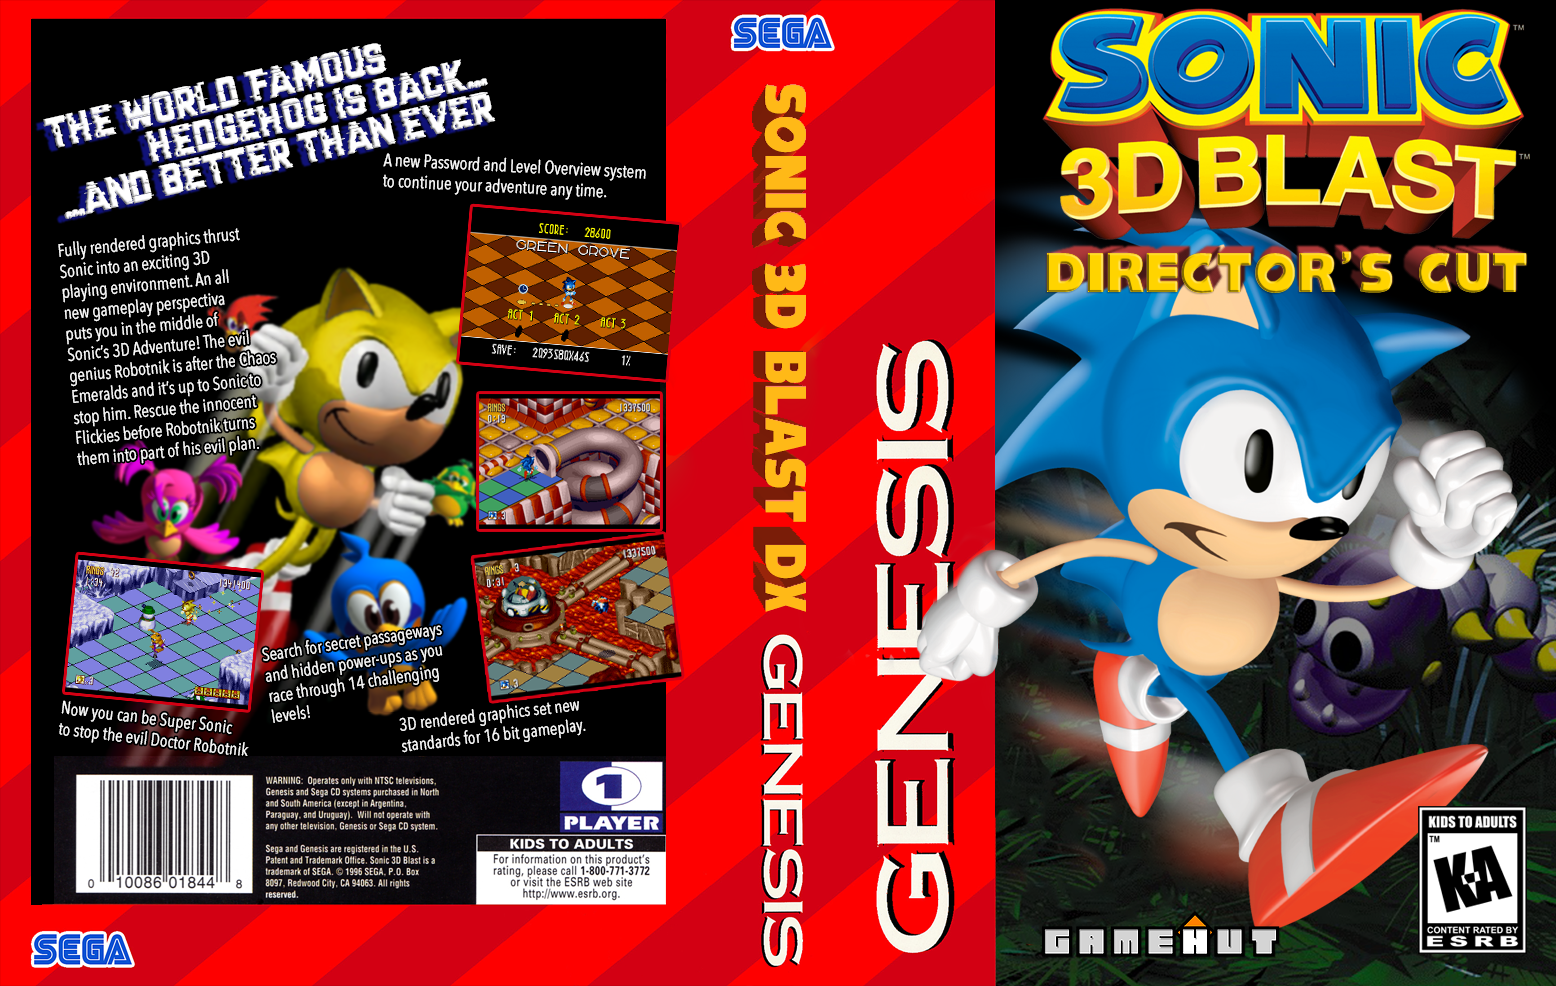 Sonic 3D Blast Director's Cut US V2 box cover